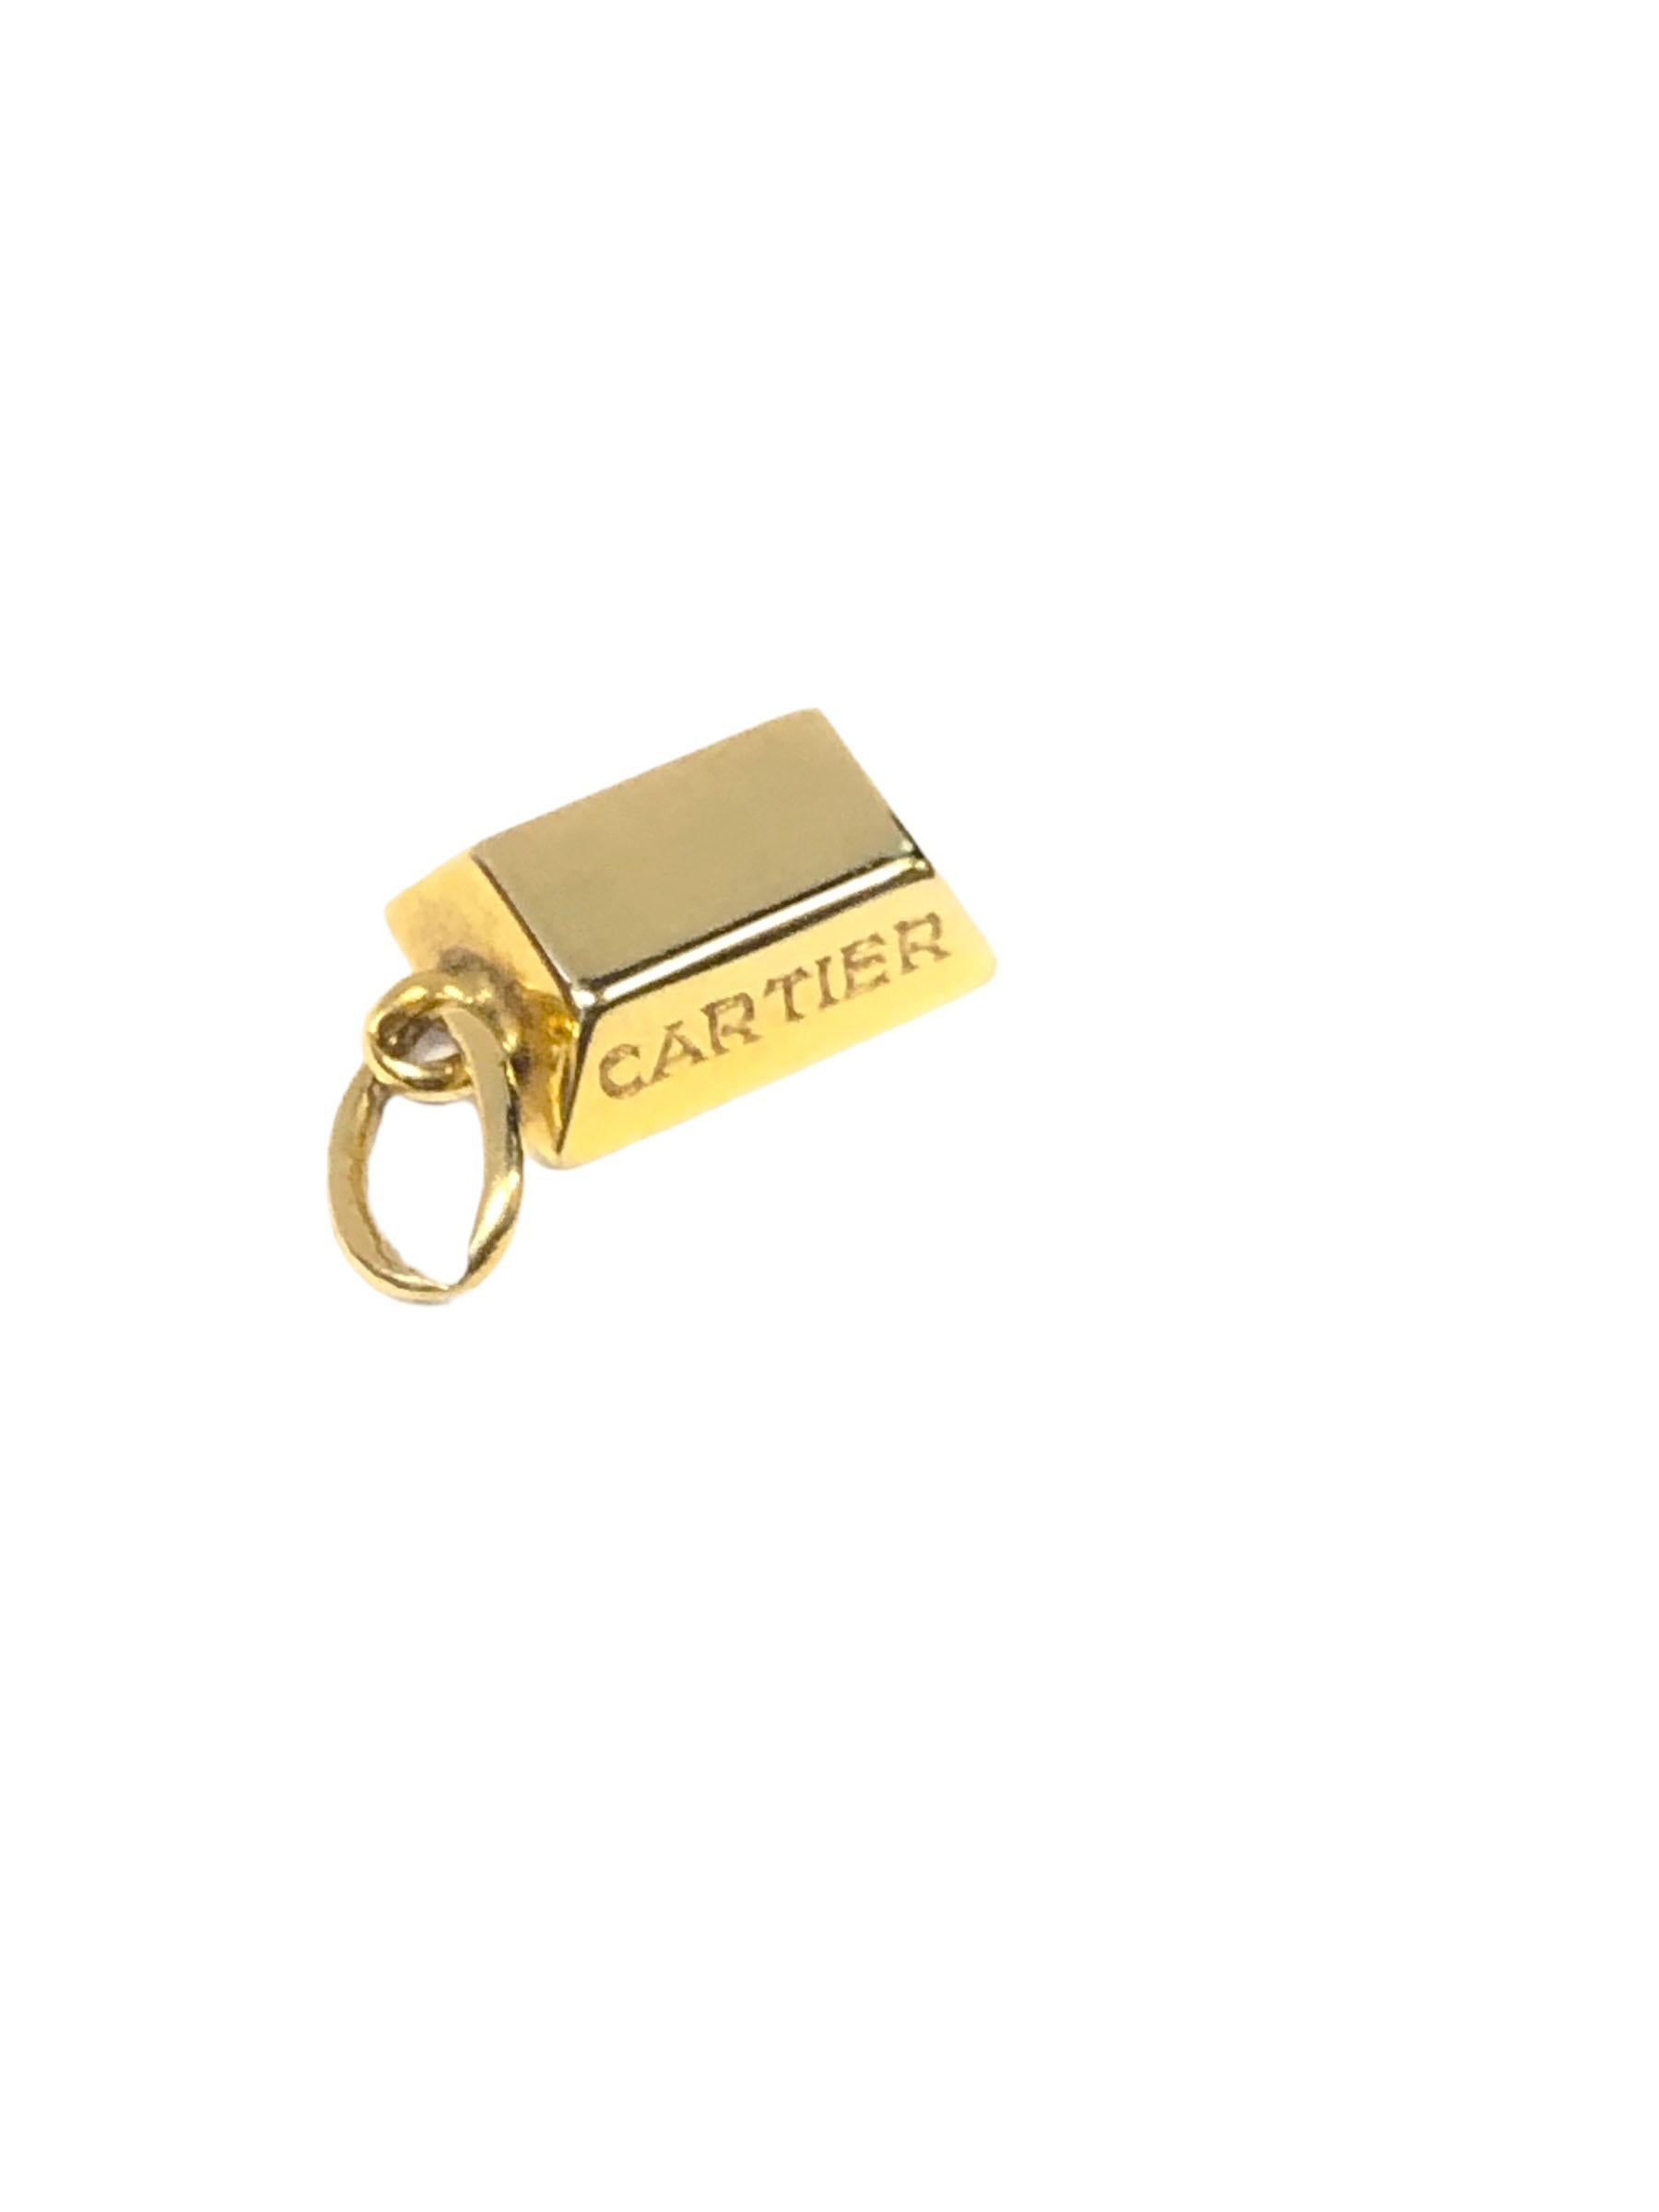 1 oz gold bar pendant